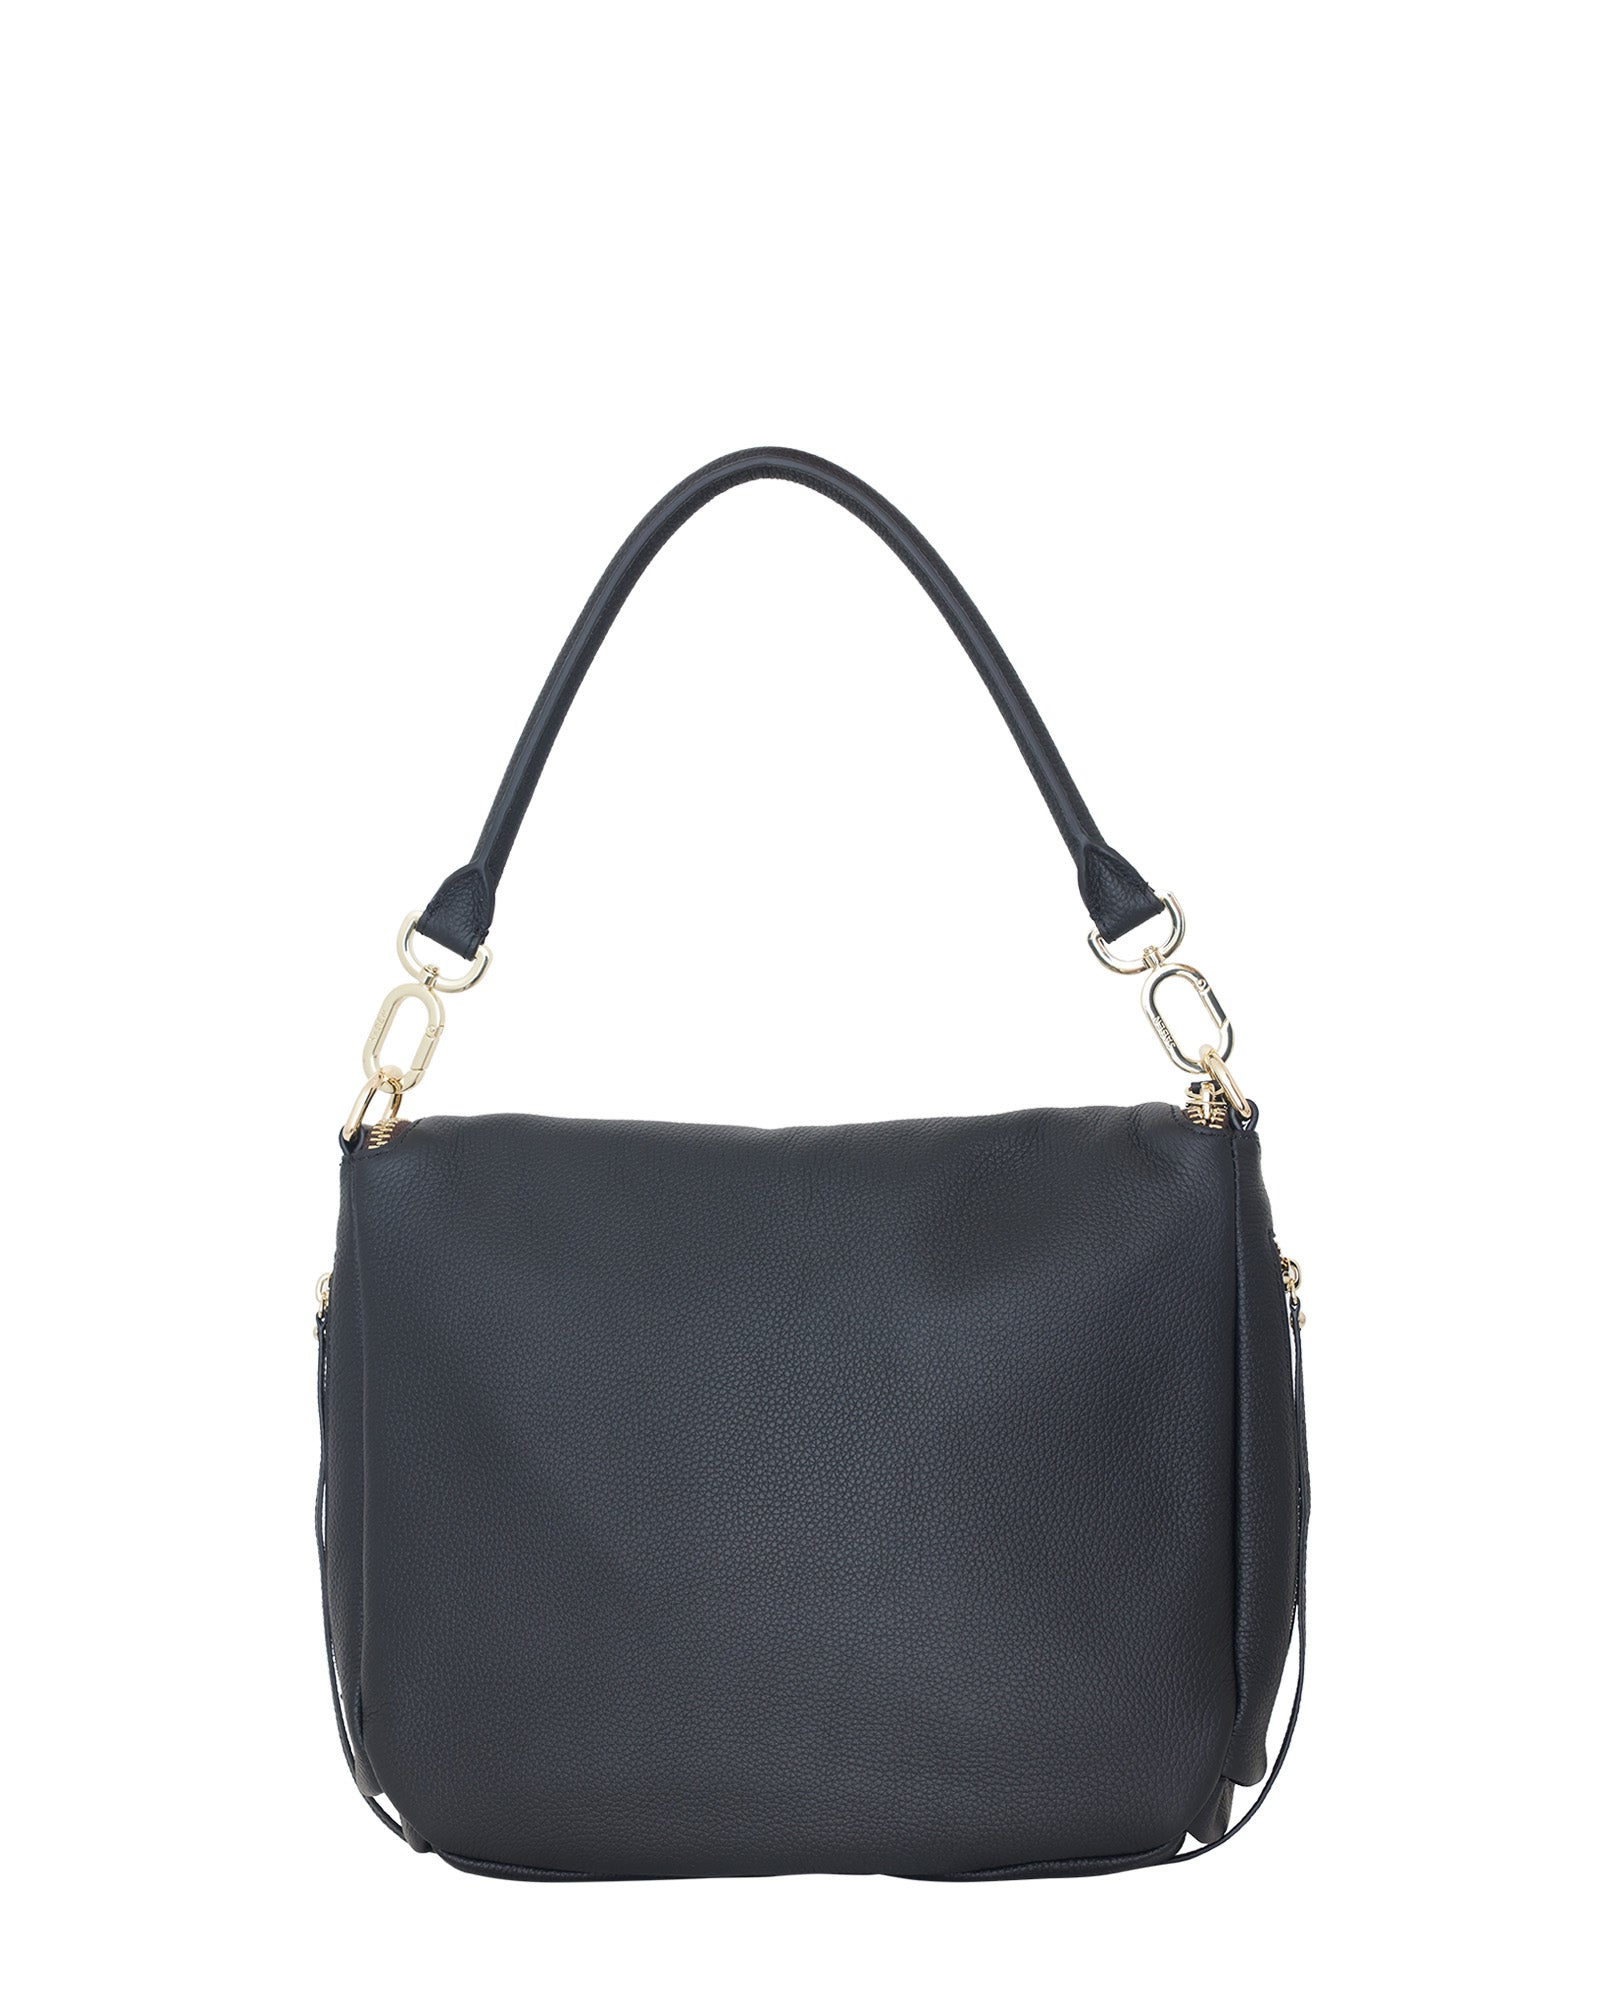 Frankie Handbag | Saben | Luxury Women's Handbags and Accessories